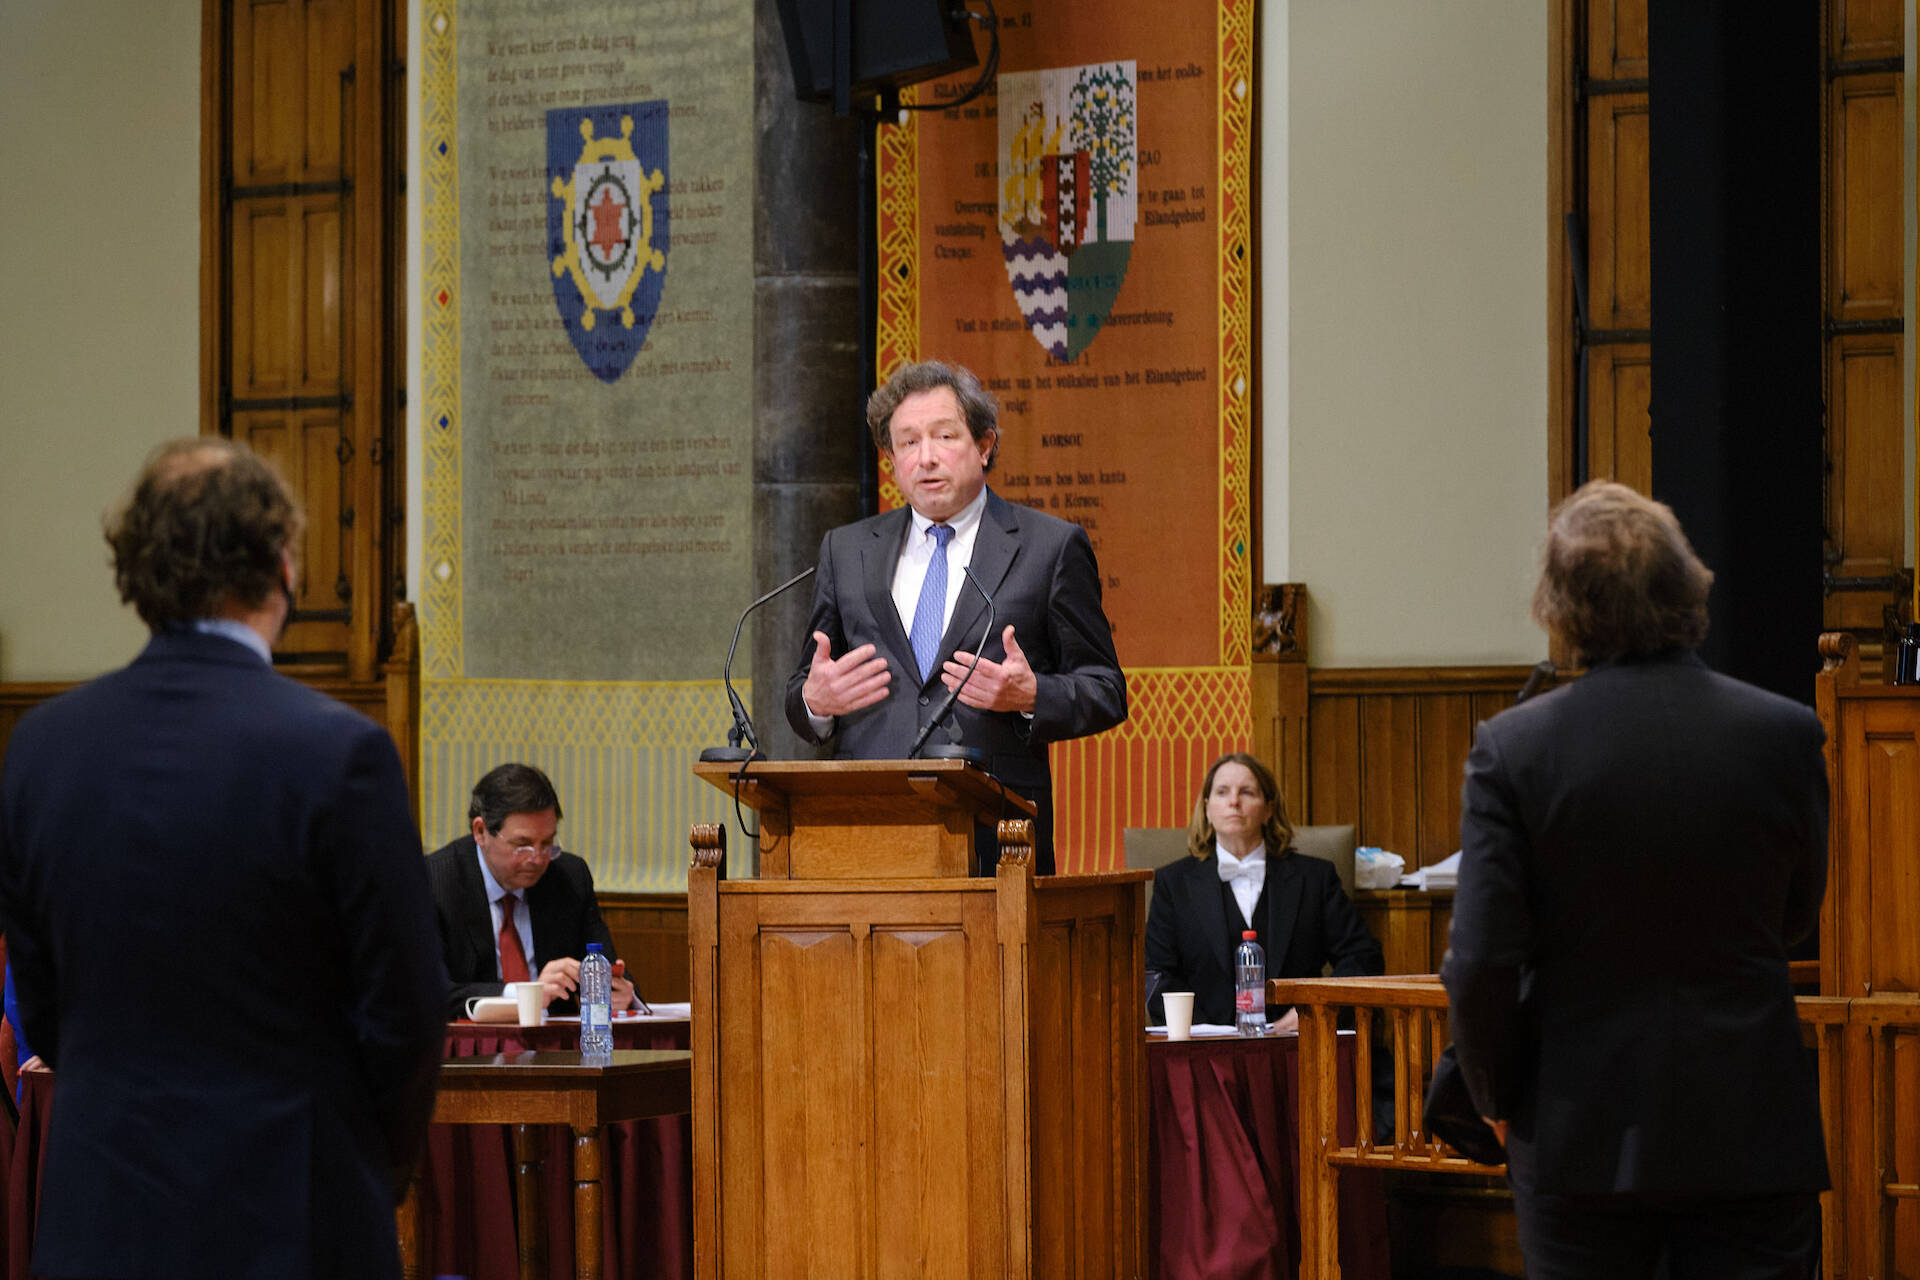 Senator Frentrop (FVD)